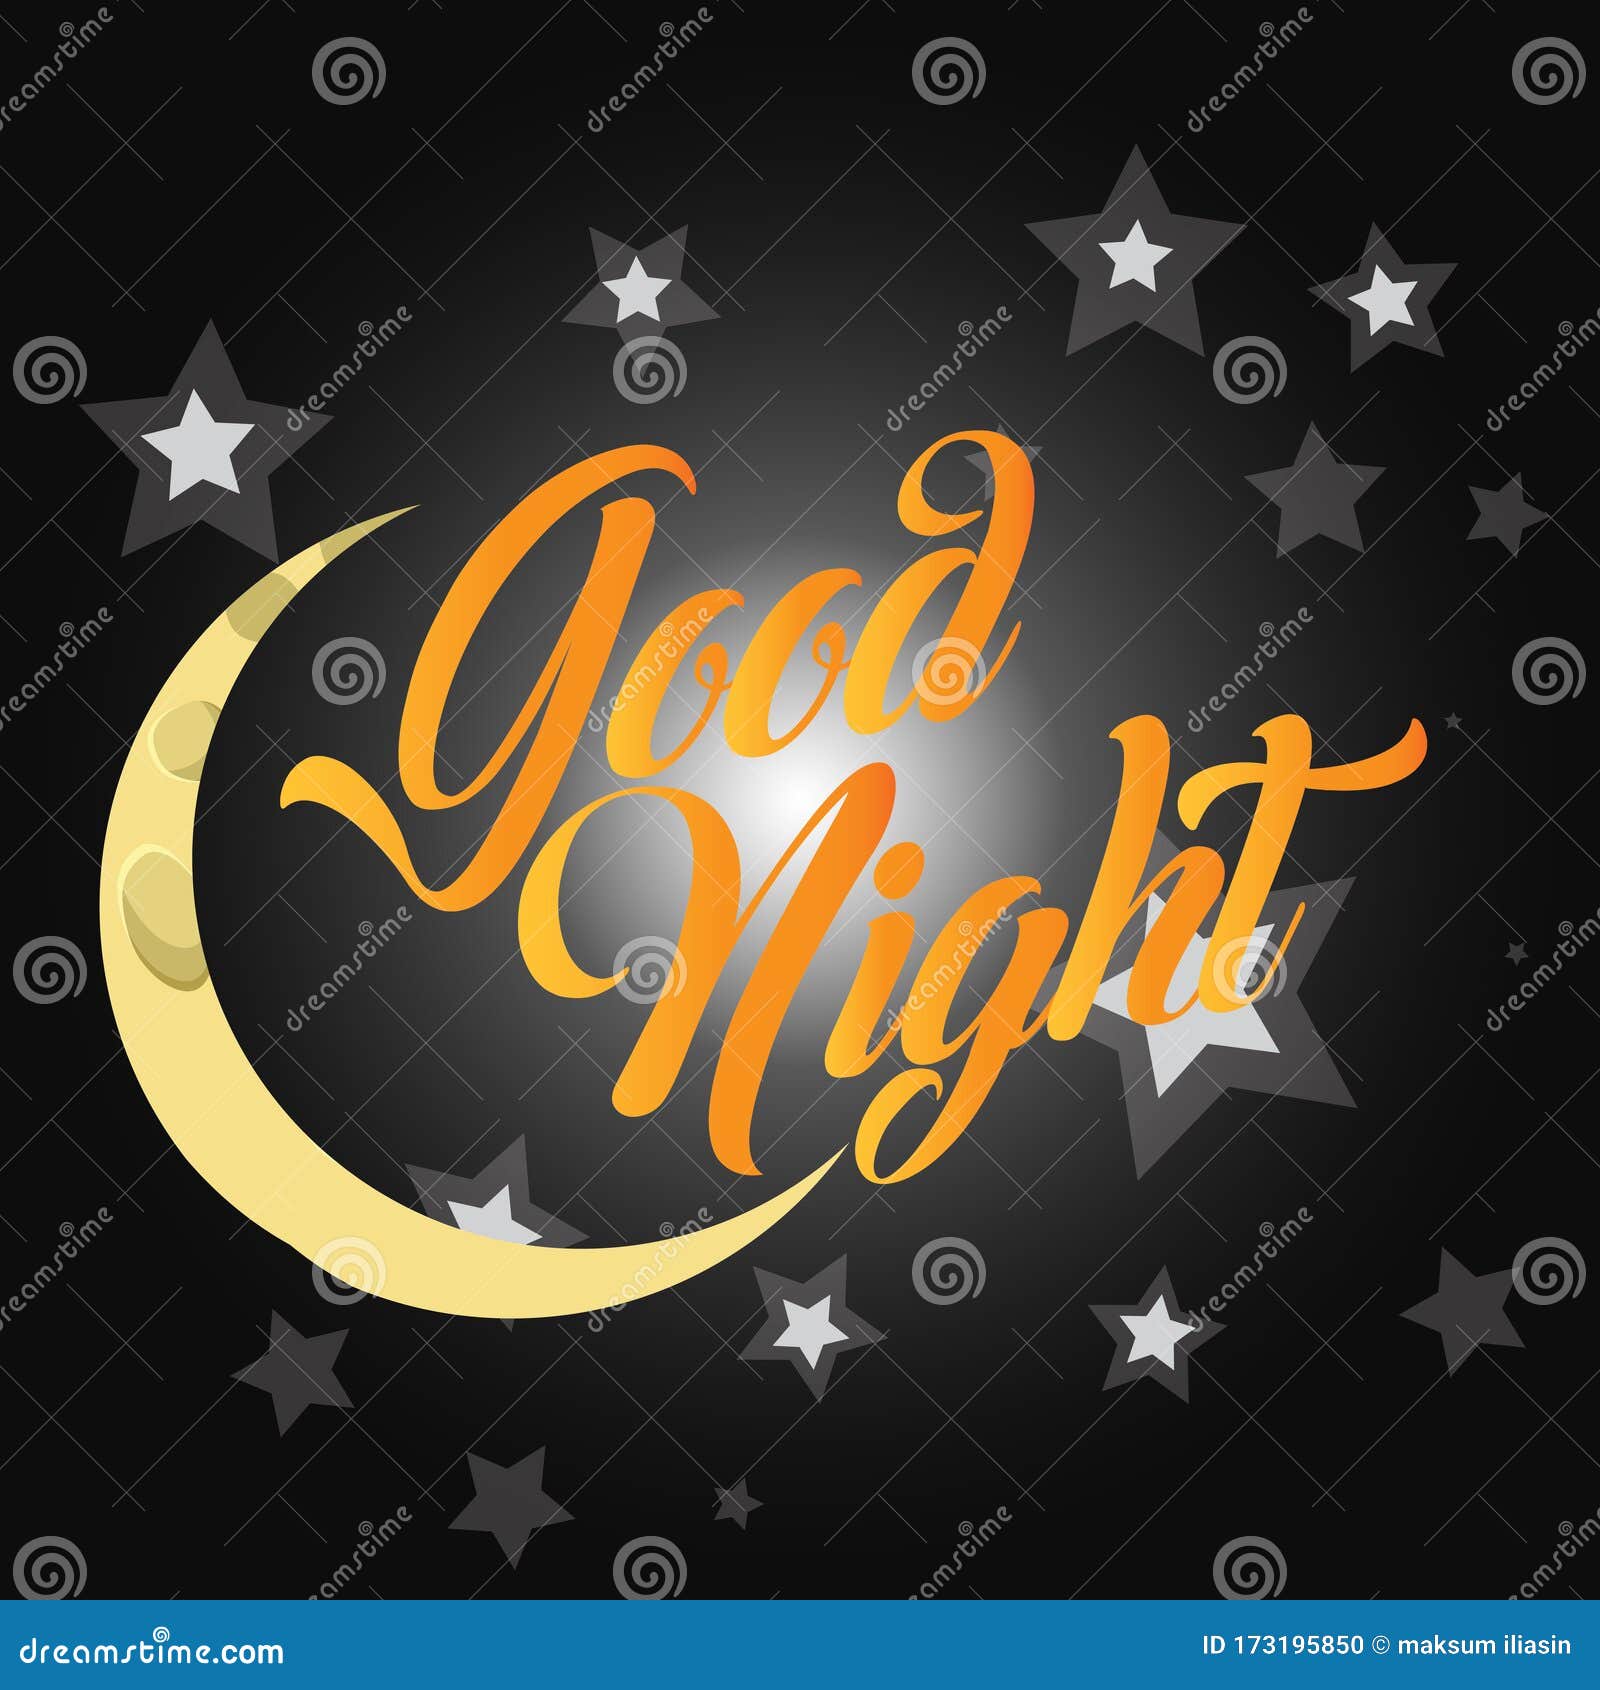 Good Night Logo Design Vector Stock Vector - Illustration of moon ...